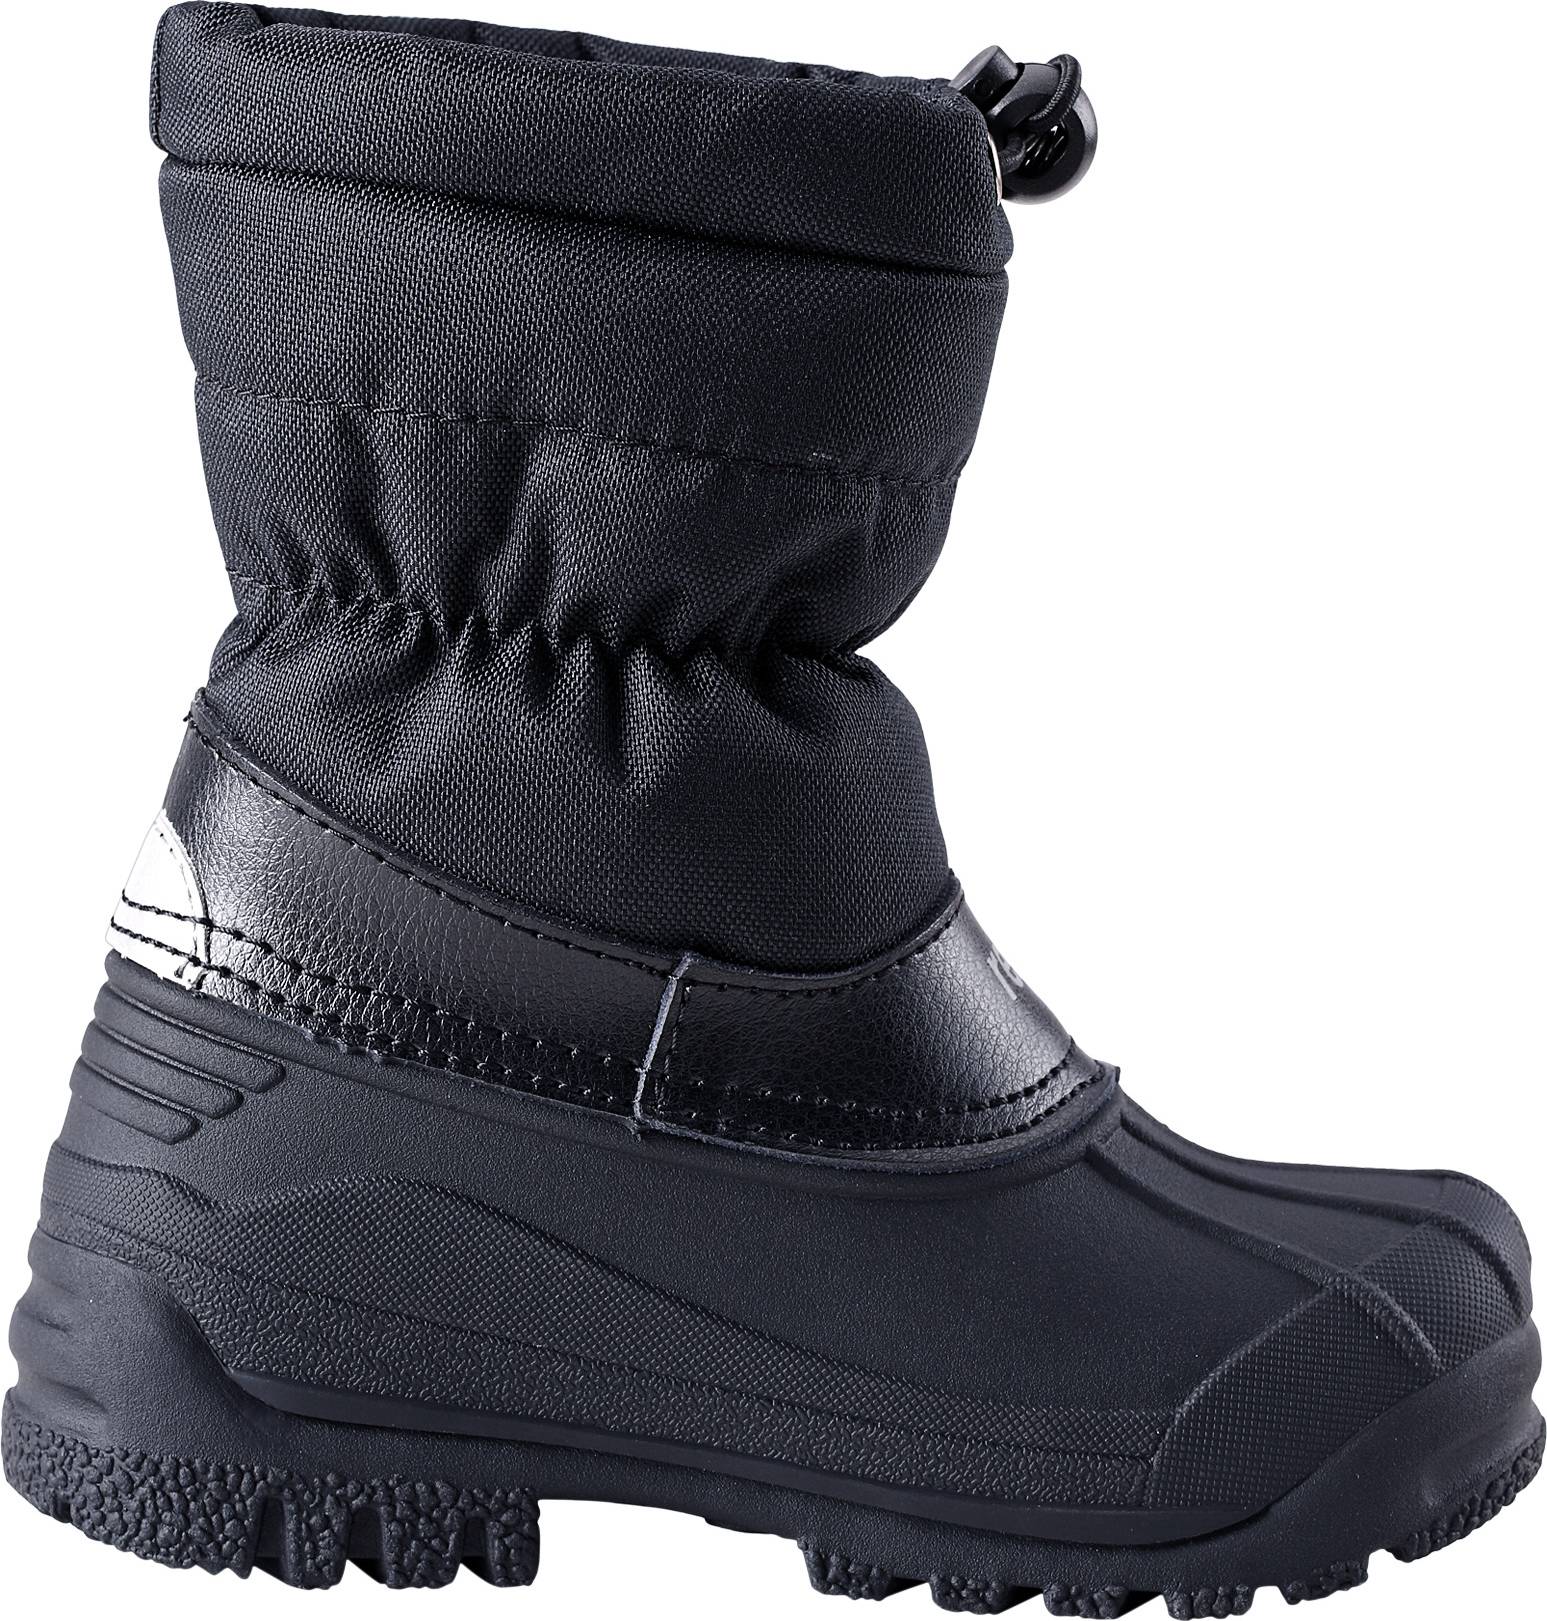  Bild på Reima Kid's Snow Boots Nefar - Black vinterskor